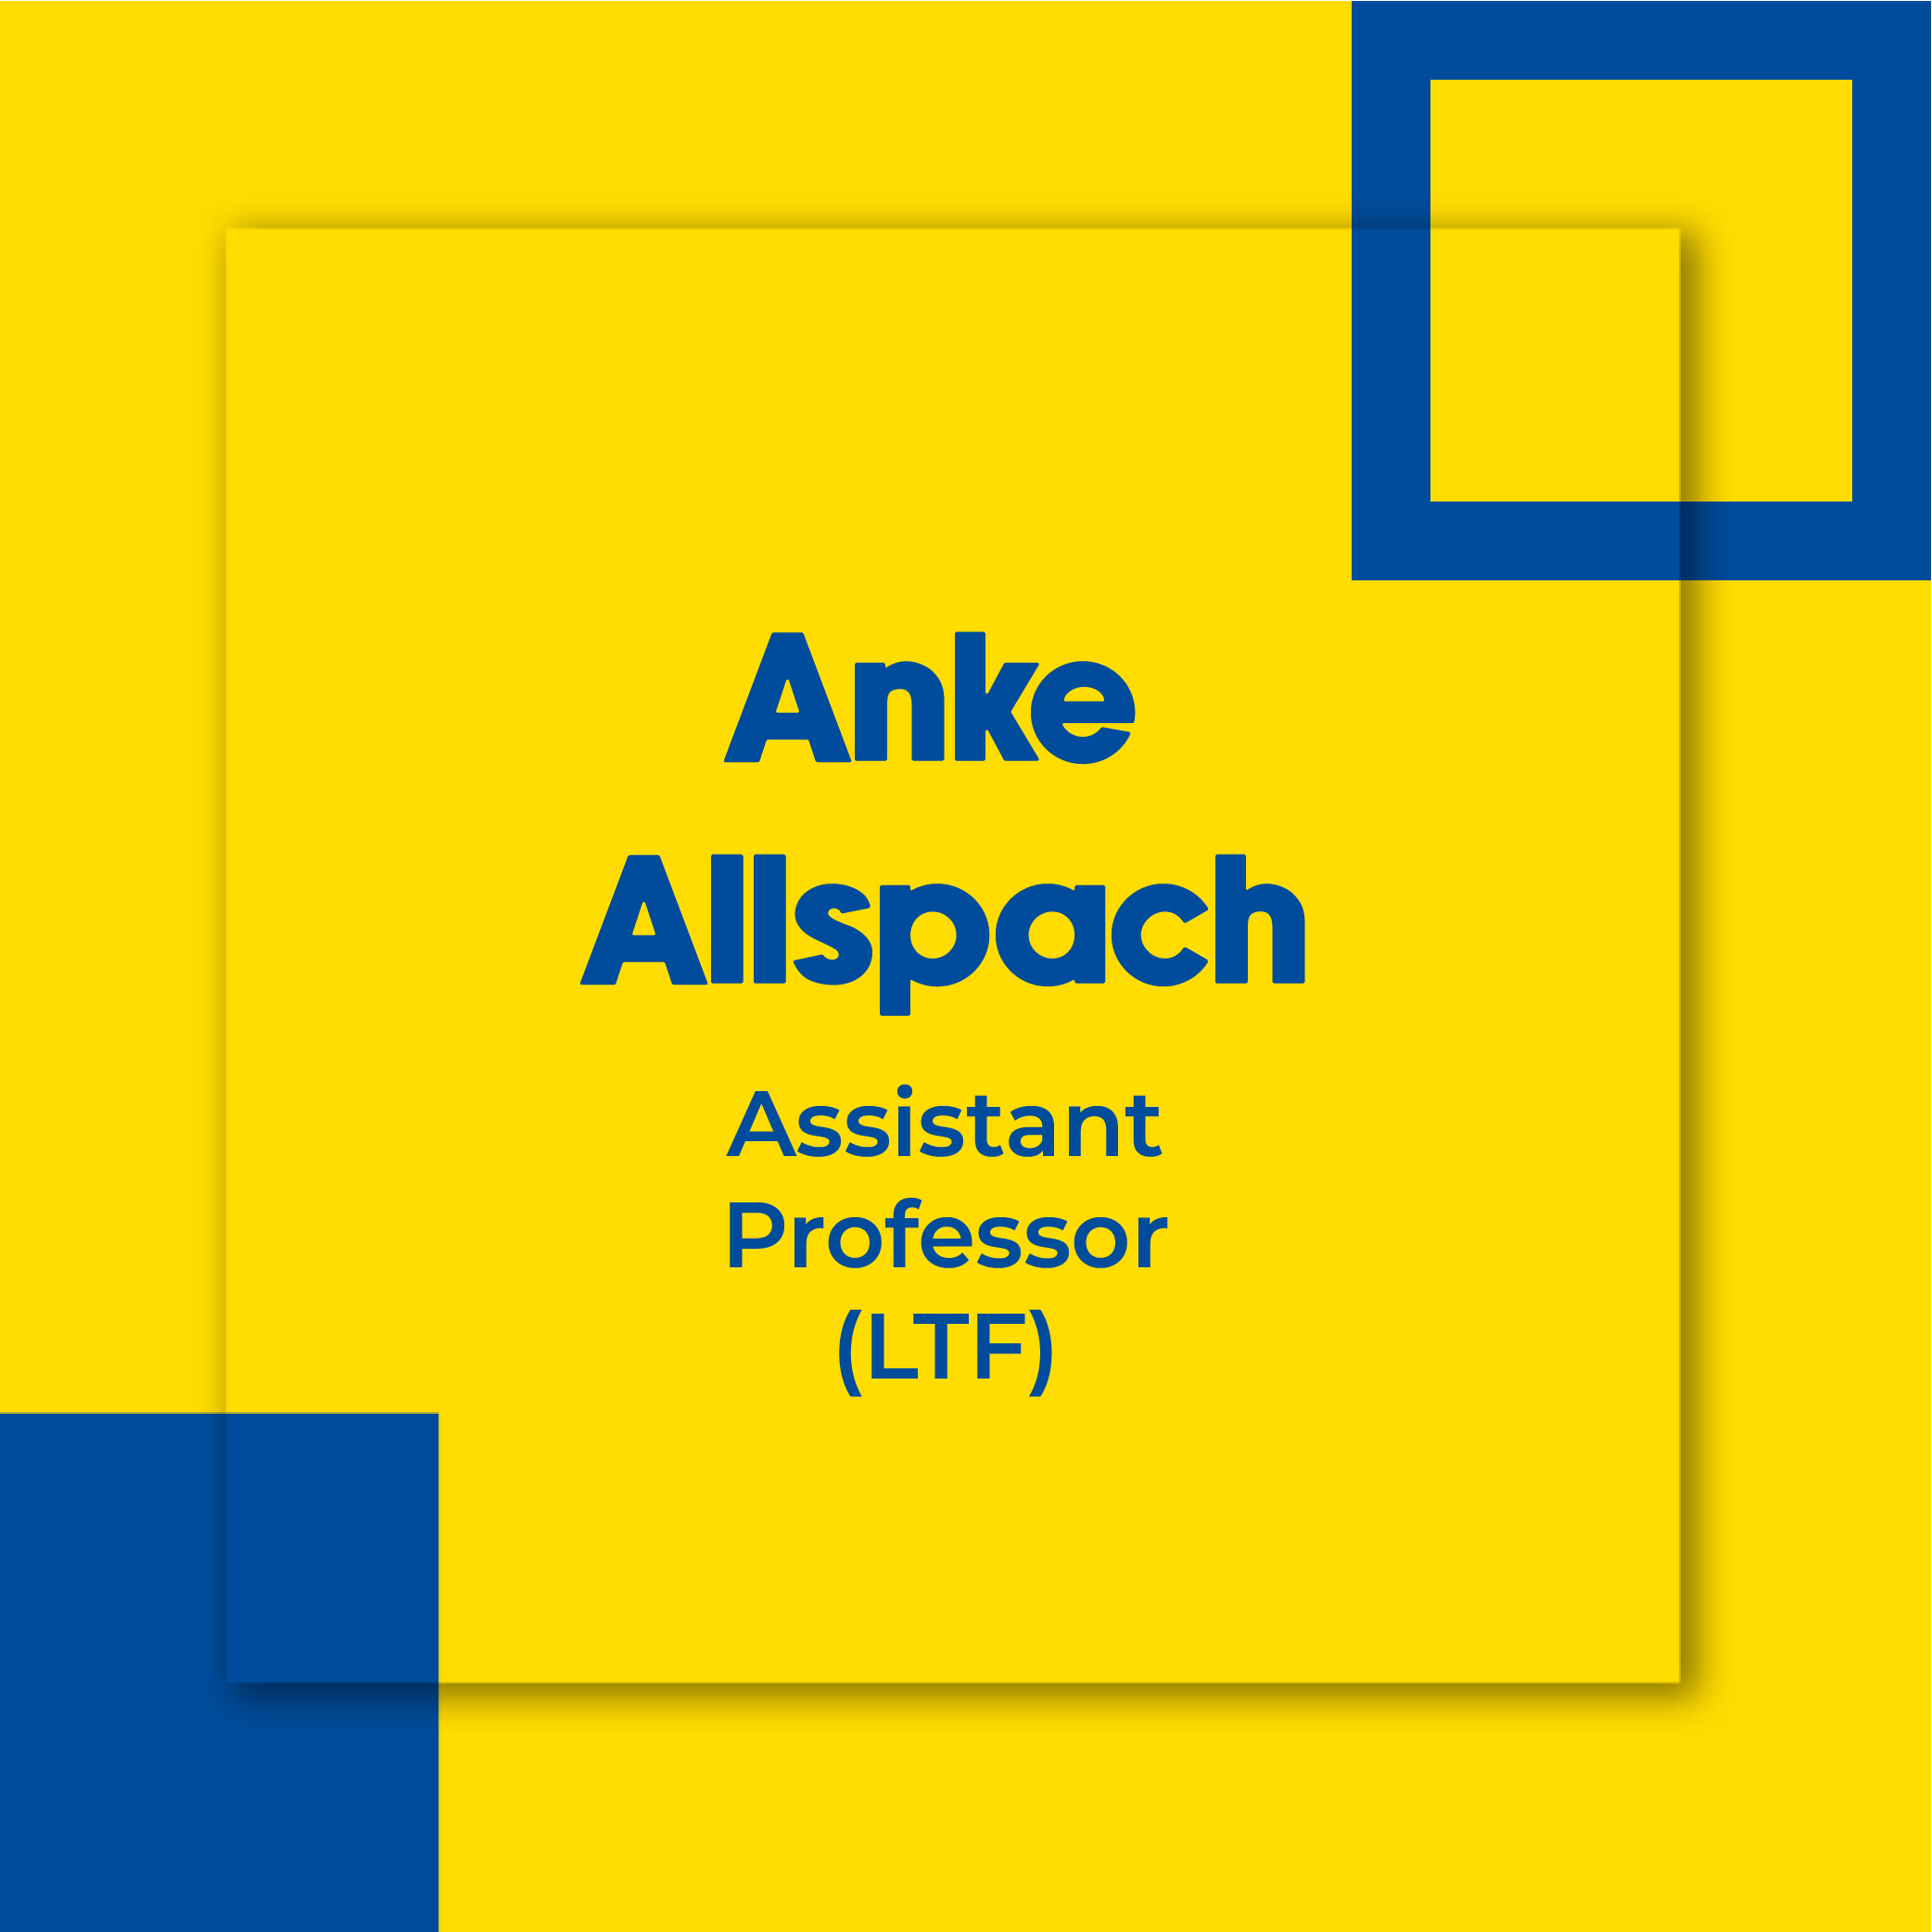 Anke Allspach, Assistant Professor